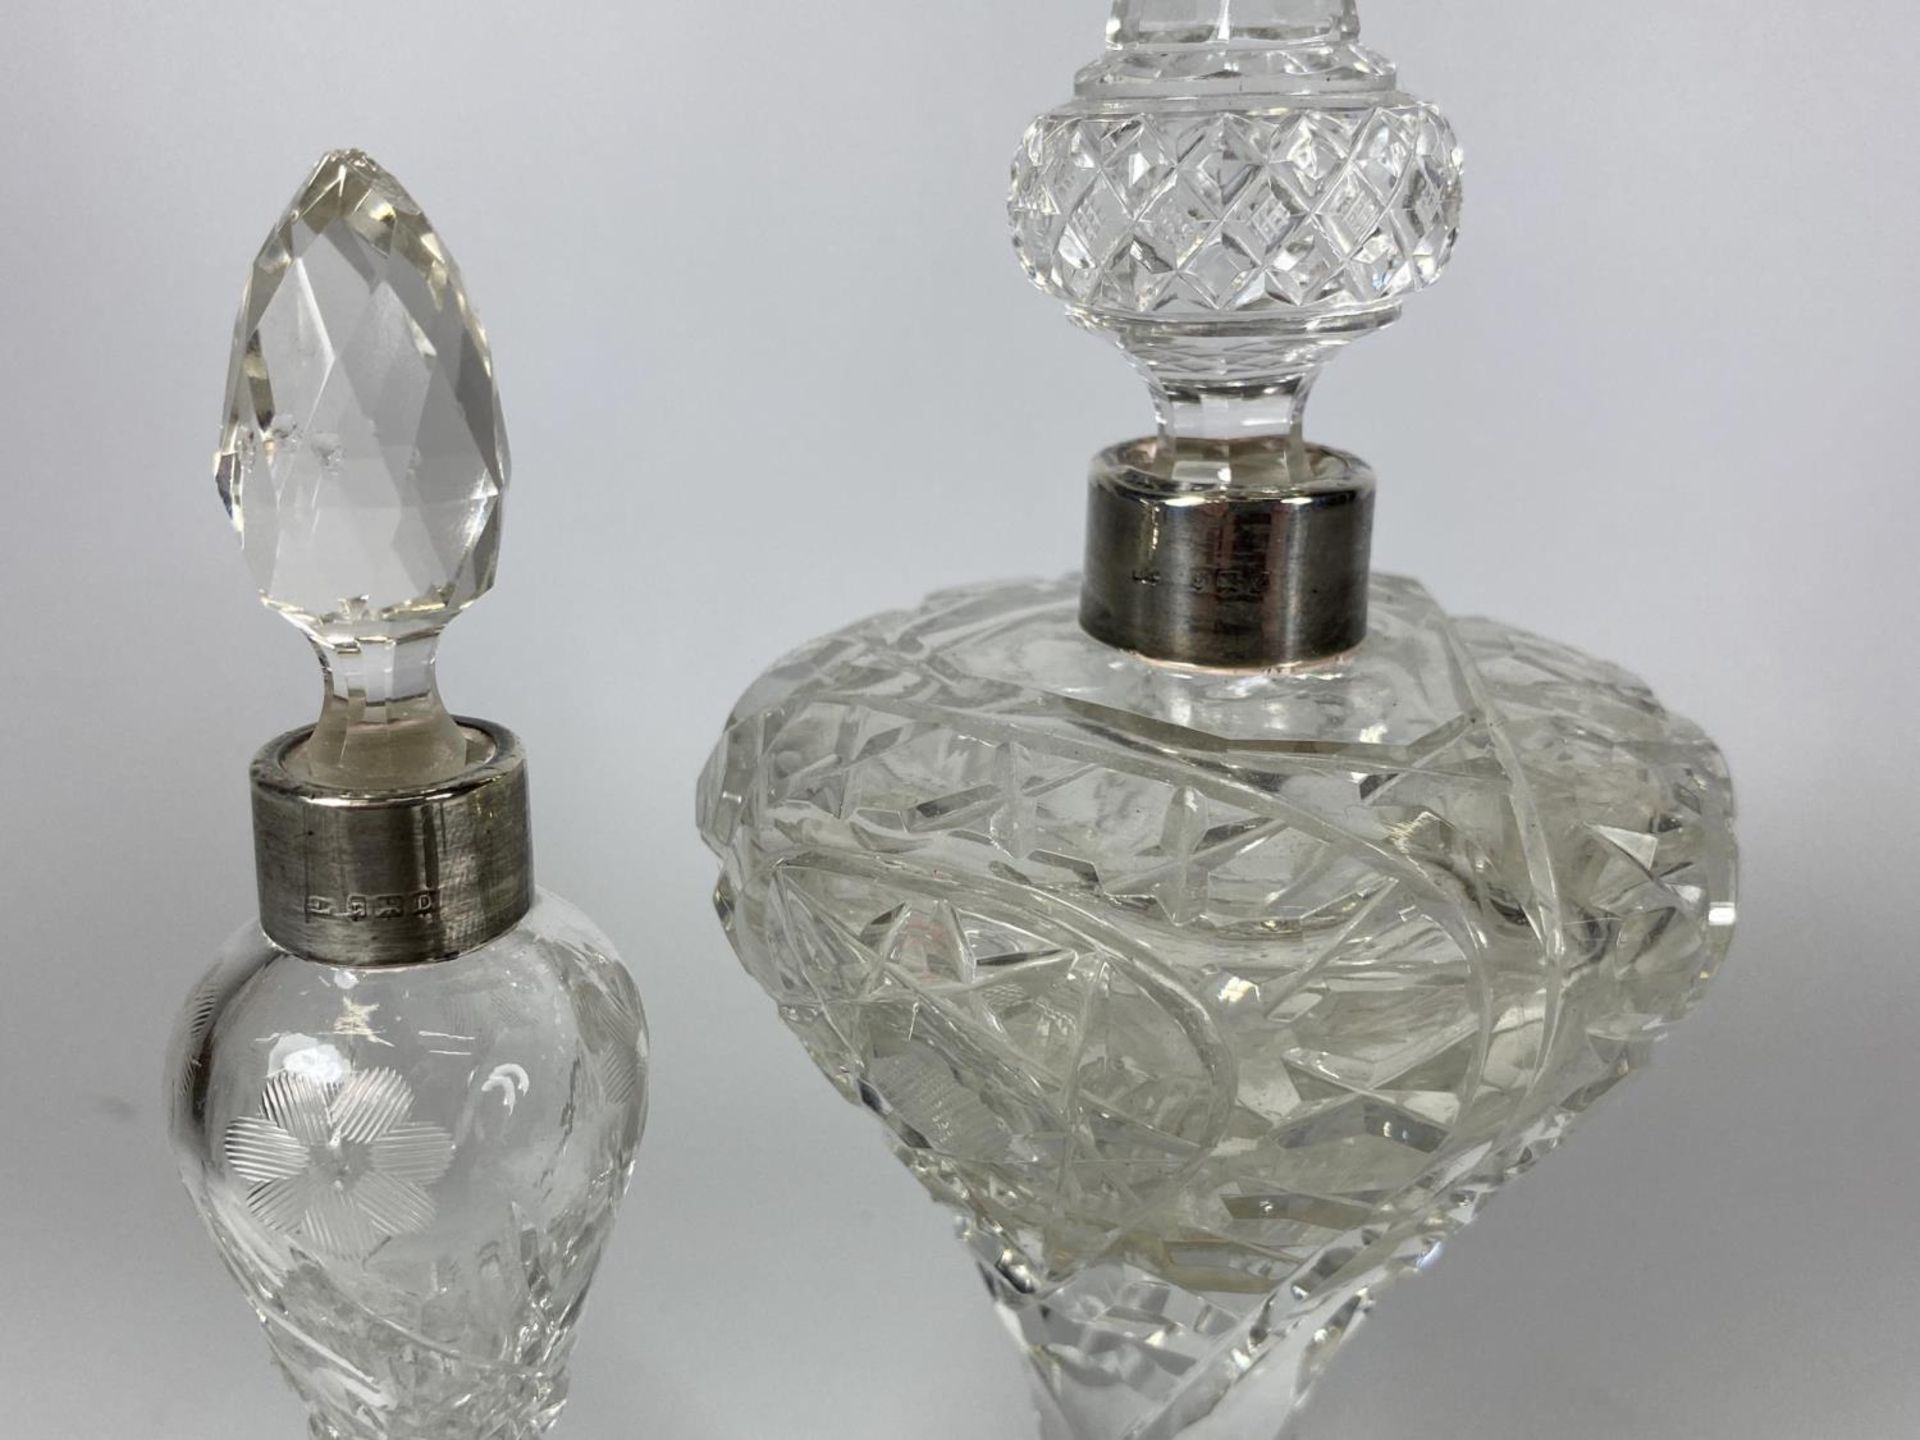 THREE HALLMARKED SILVER & CUT GLASS PERFUME BOTTLES - Image 3 of 3